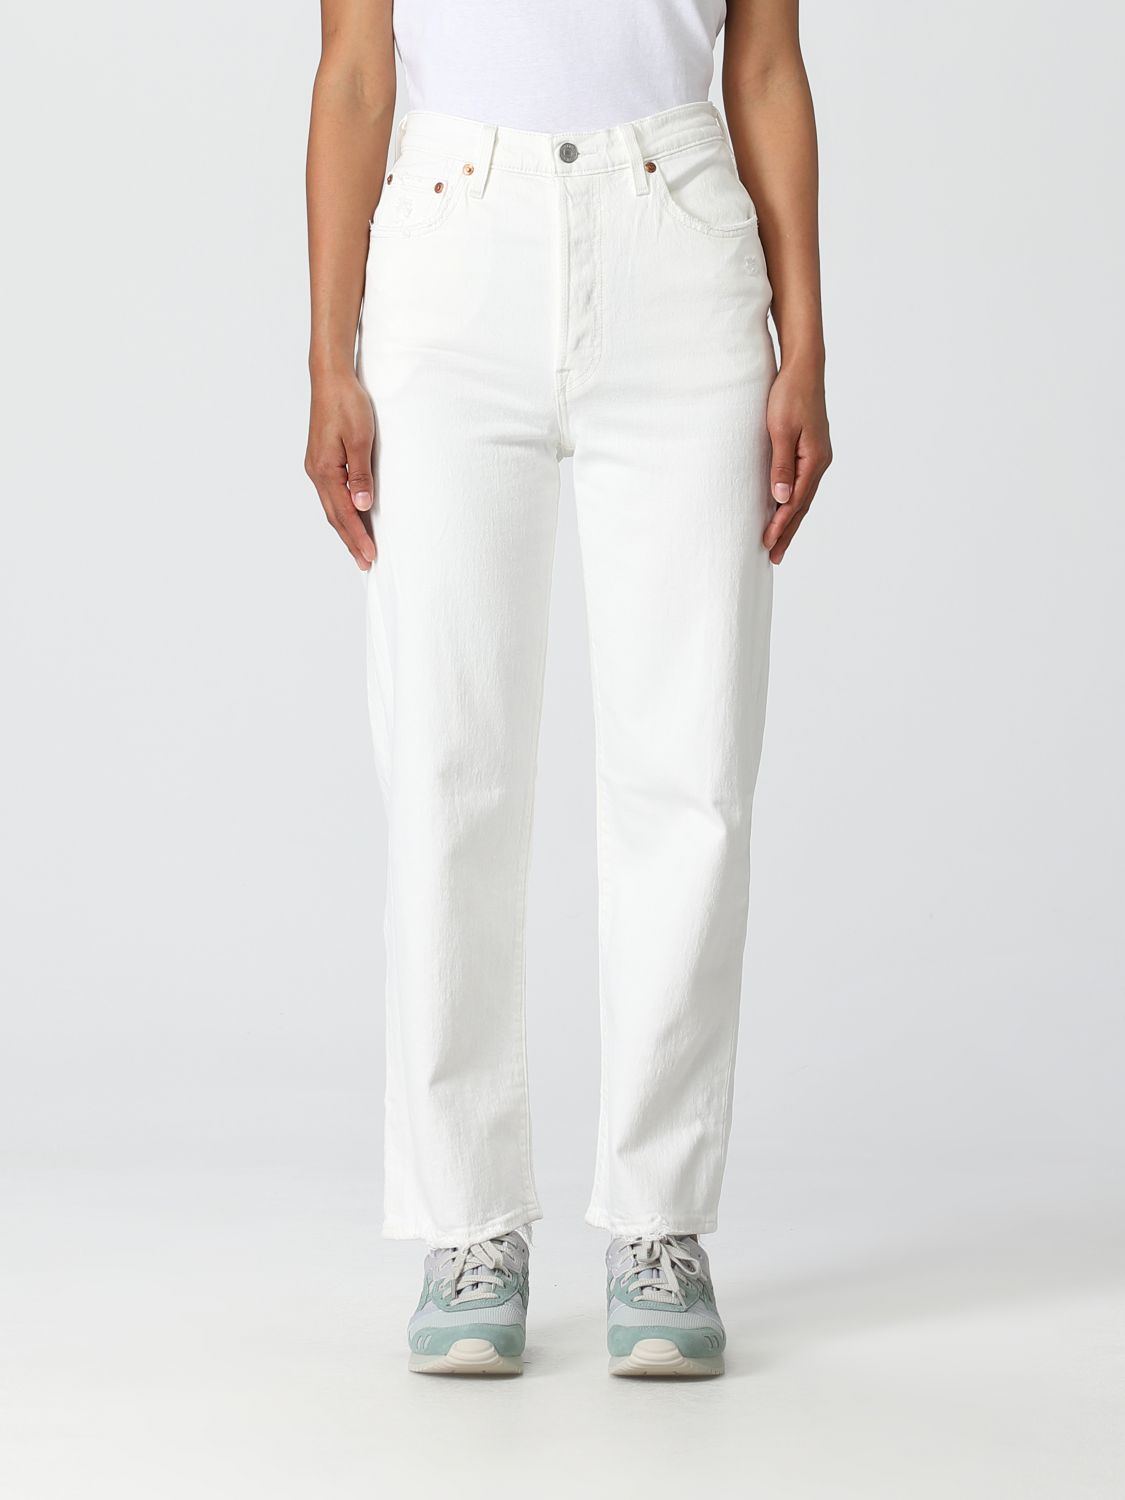 LEVI'S: pants for woman - Natural | Levi's pants 726930076 online on ...